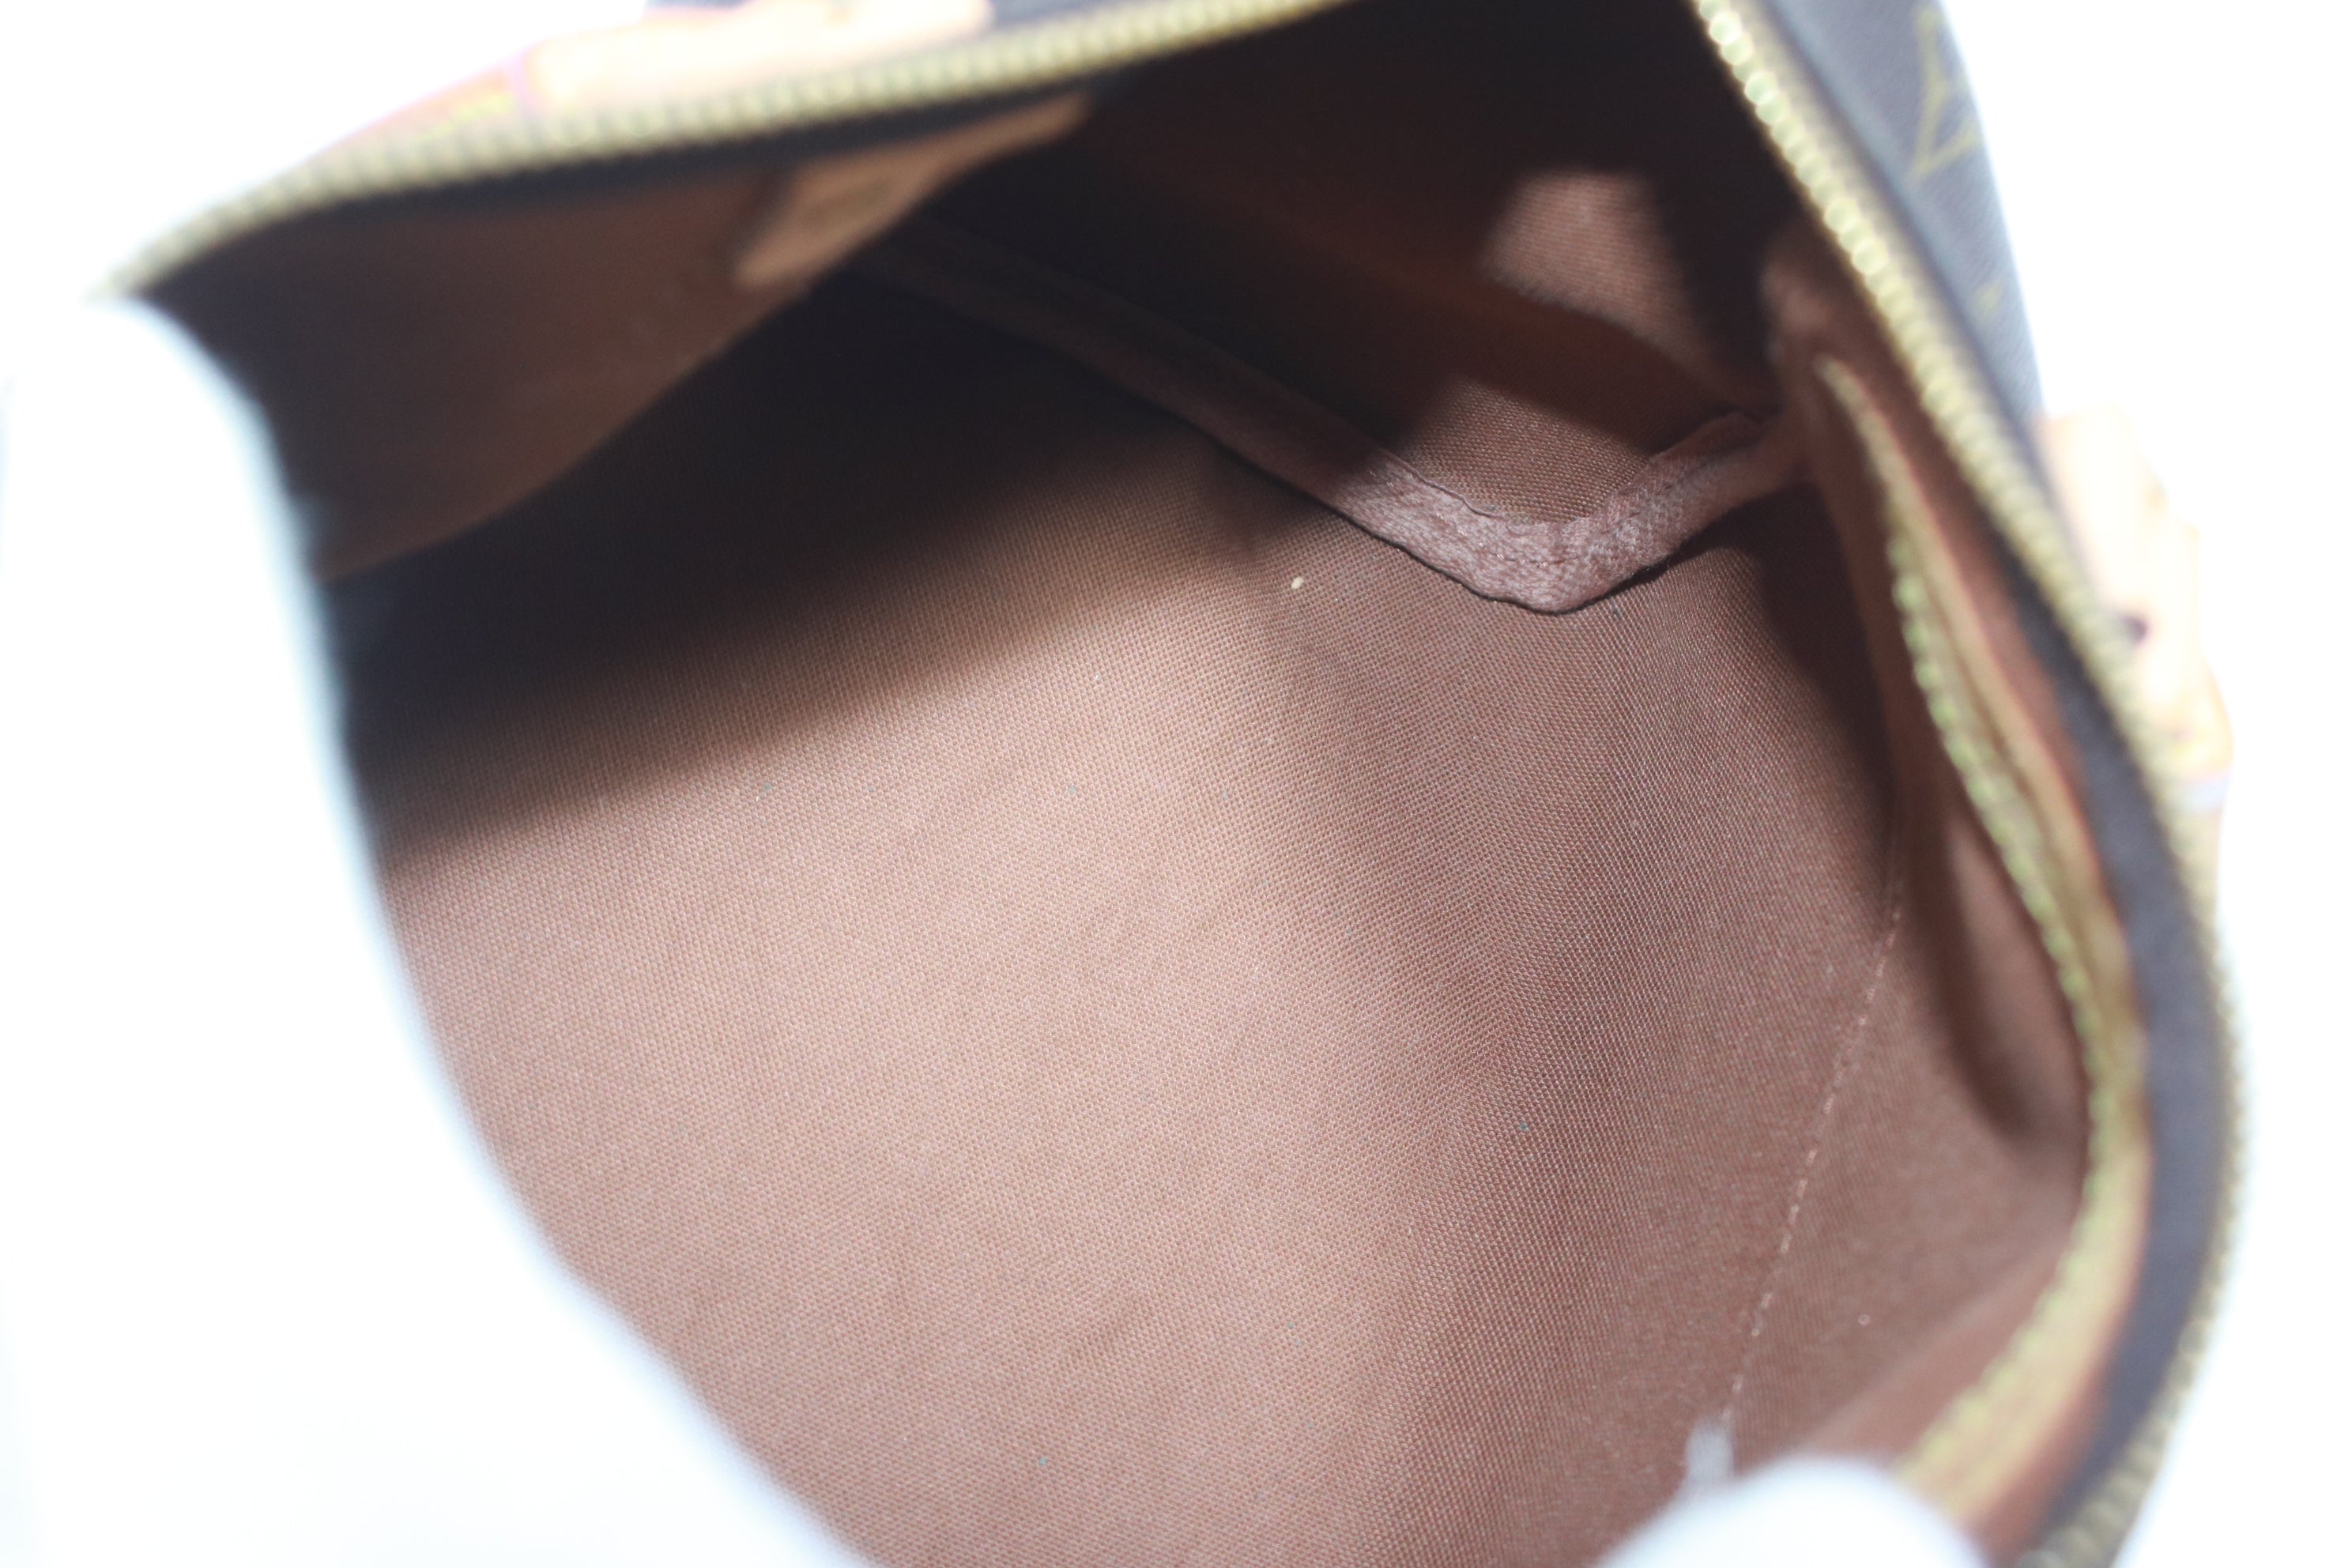 Louis Vuitton Ellipse mm Handbag used (6808)